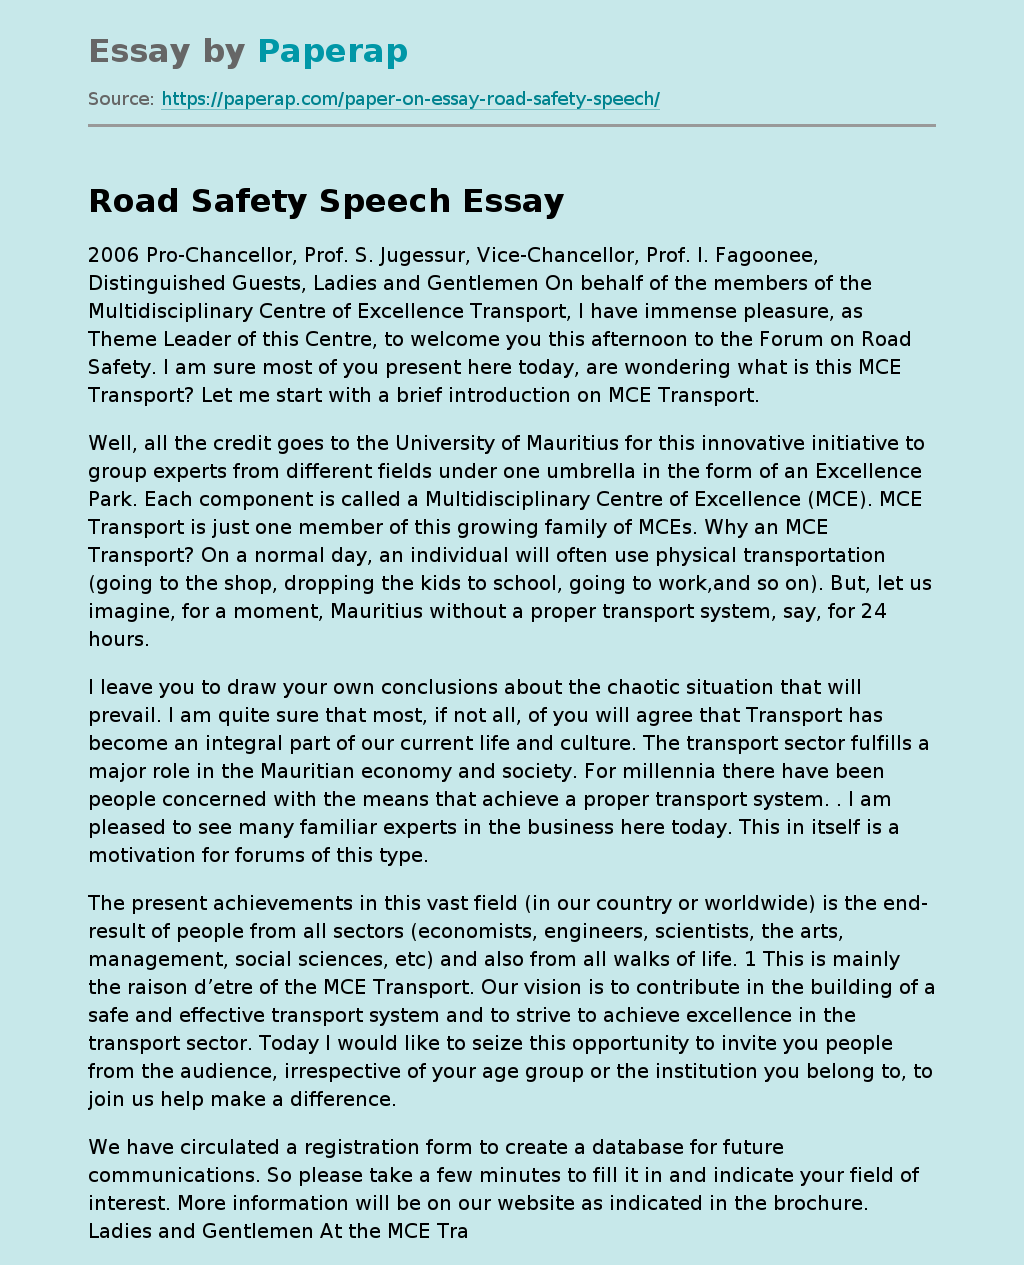 Road Safety Speech: MCE Transport